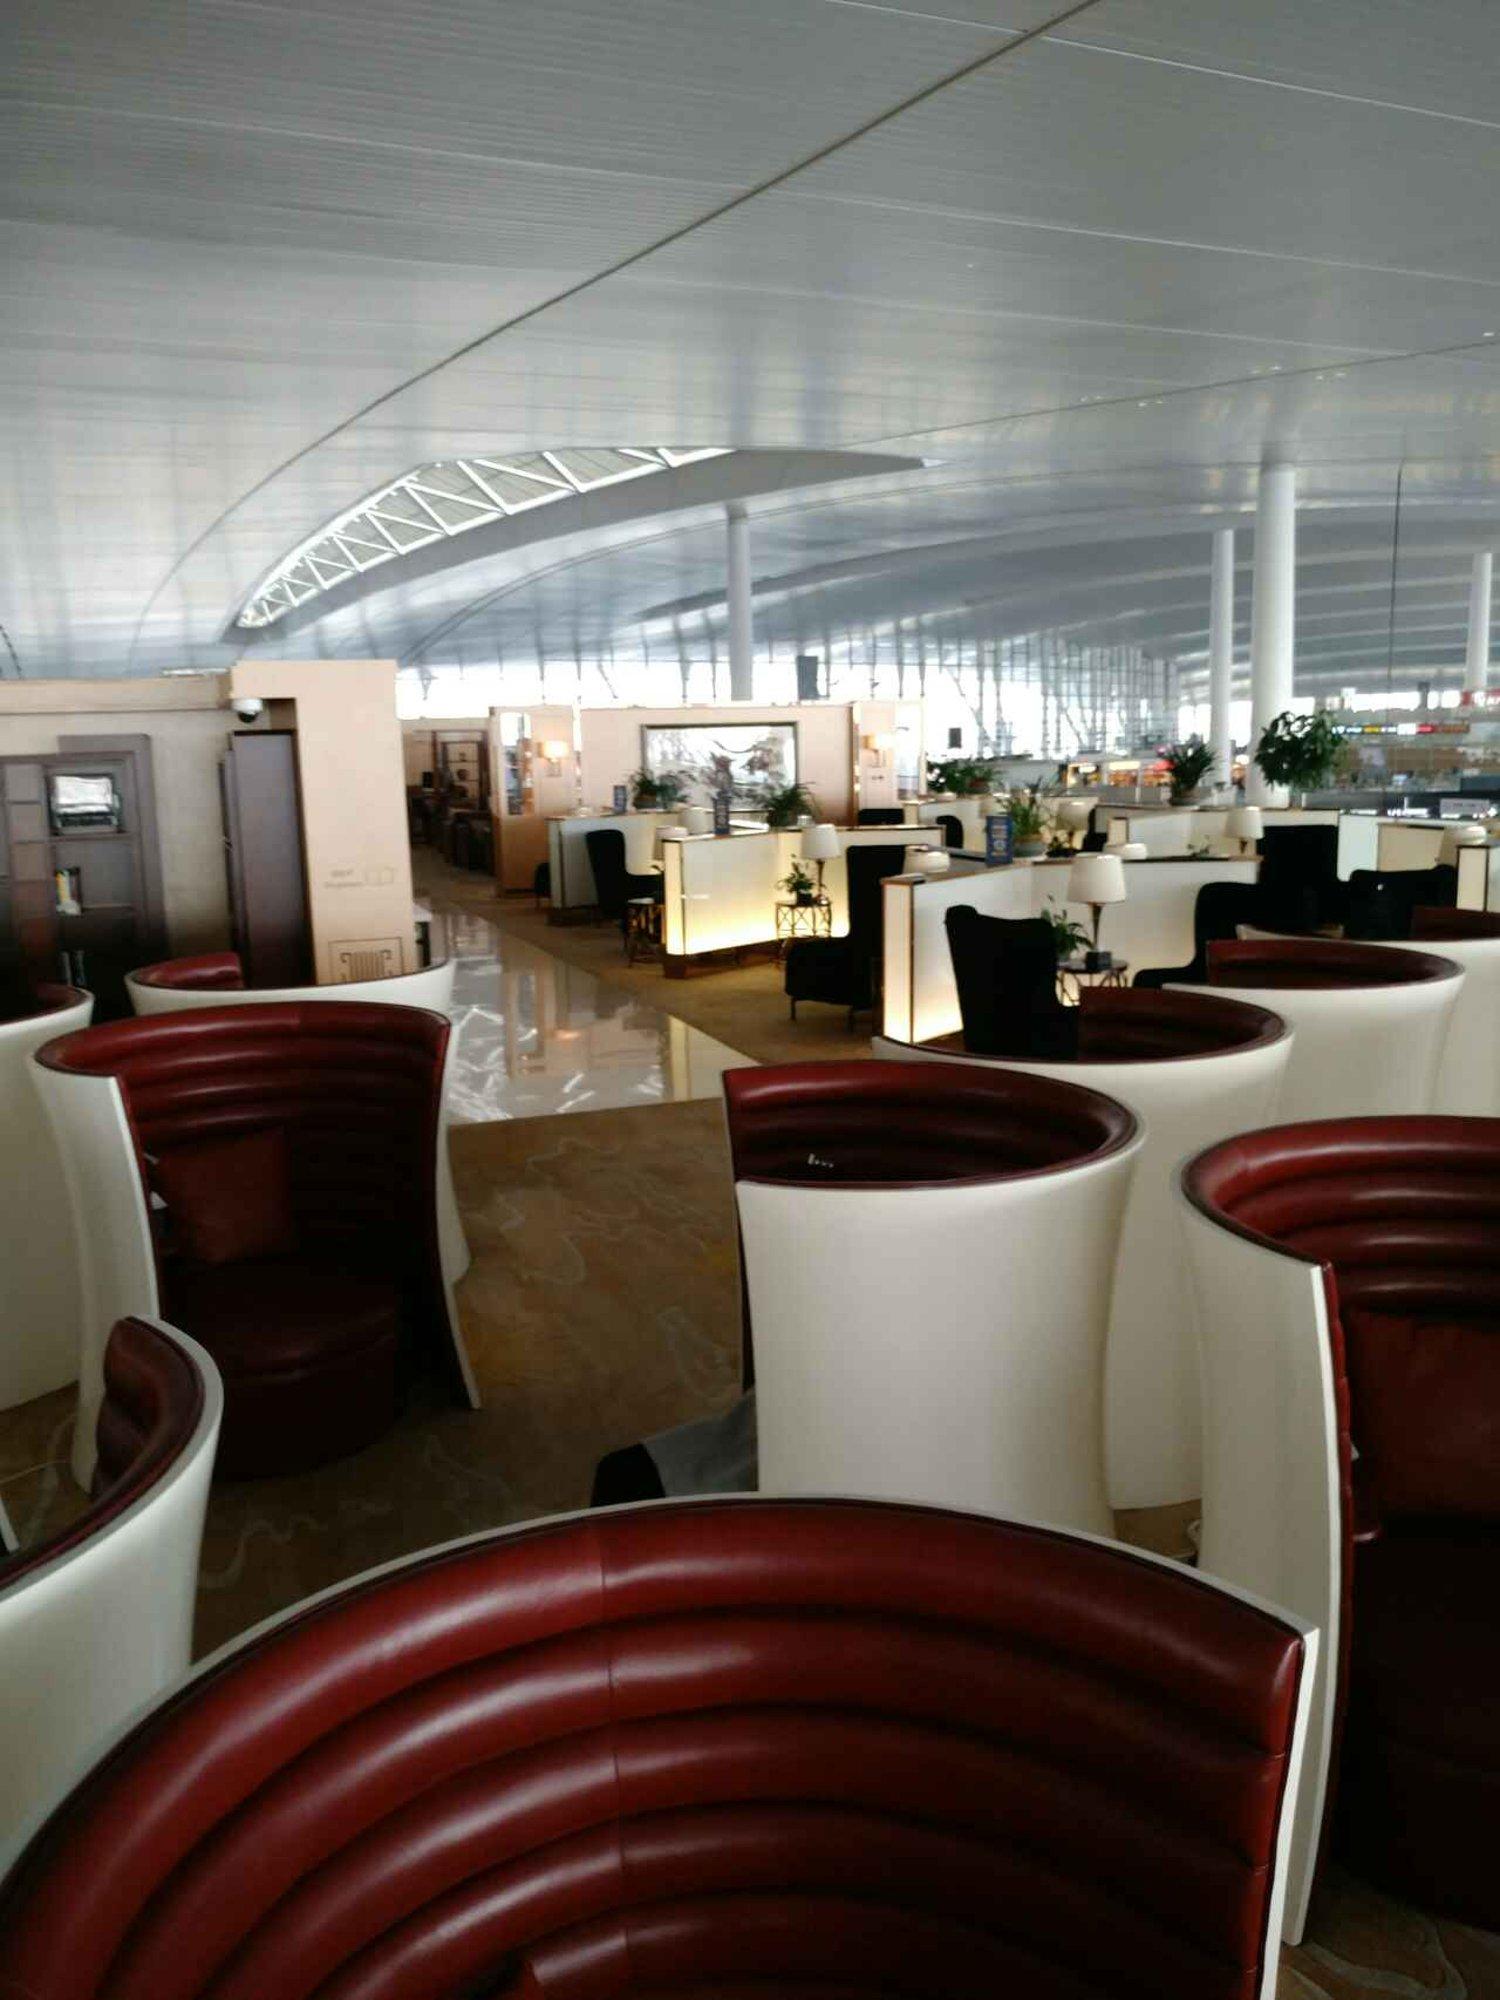 V2 Shenzhen Airlines King Lounge image 2 of 4